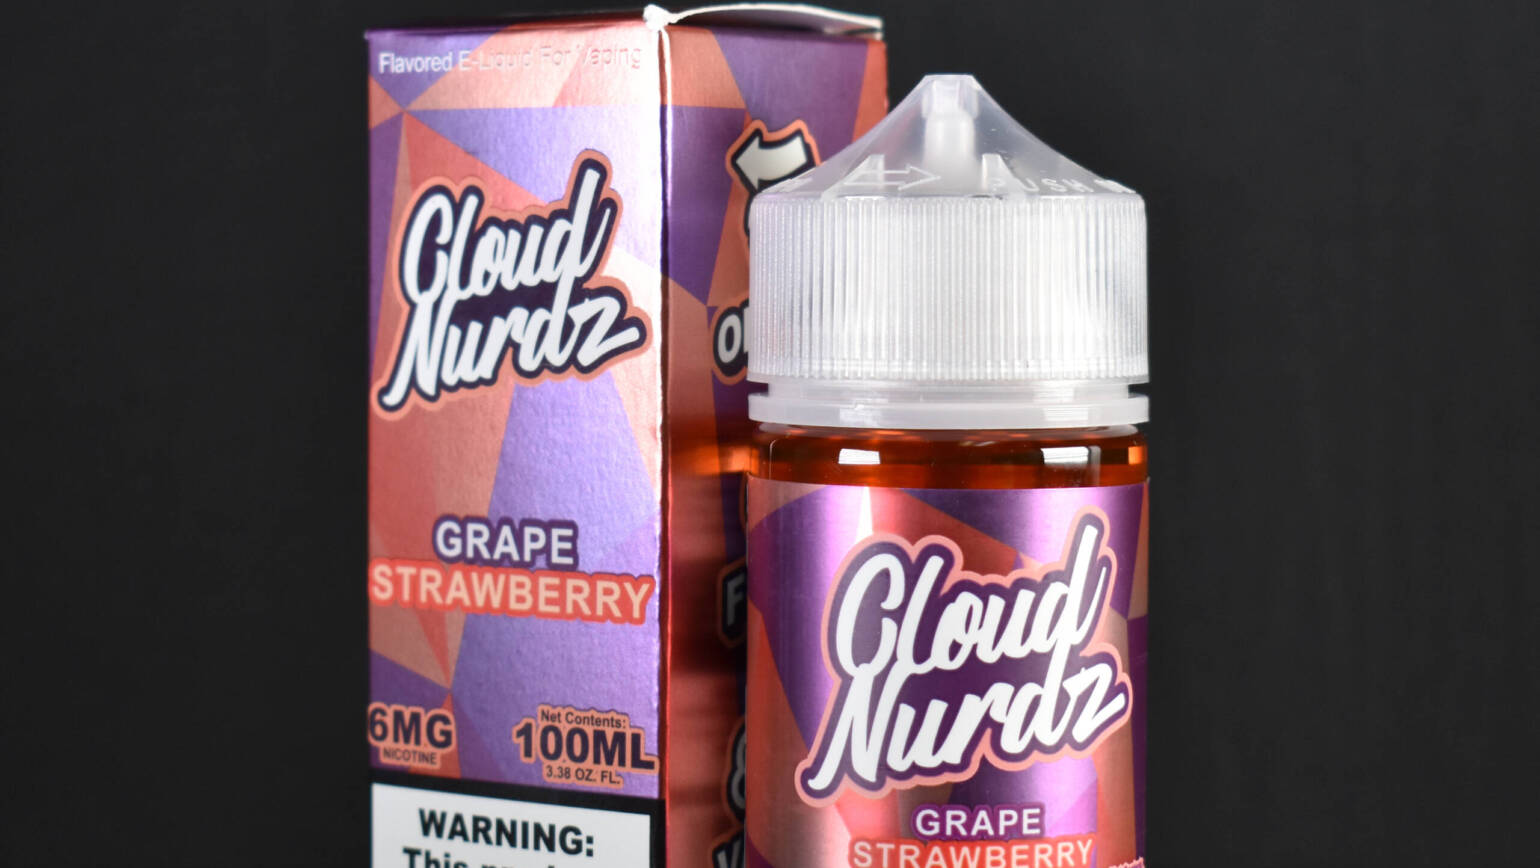 Cloud Nurdz – Grape Strawberry